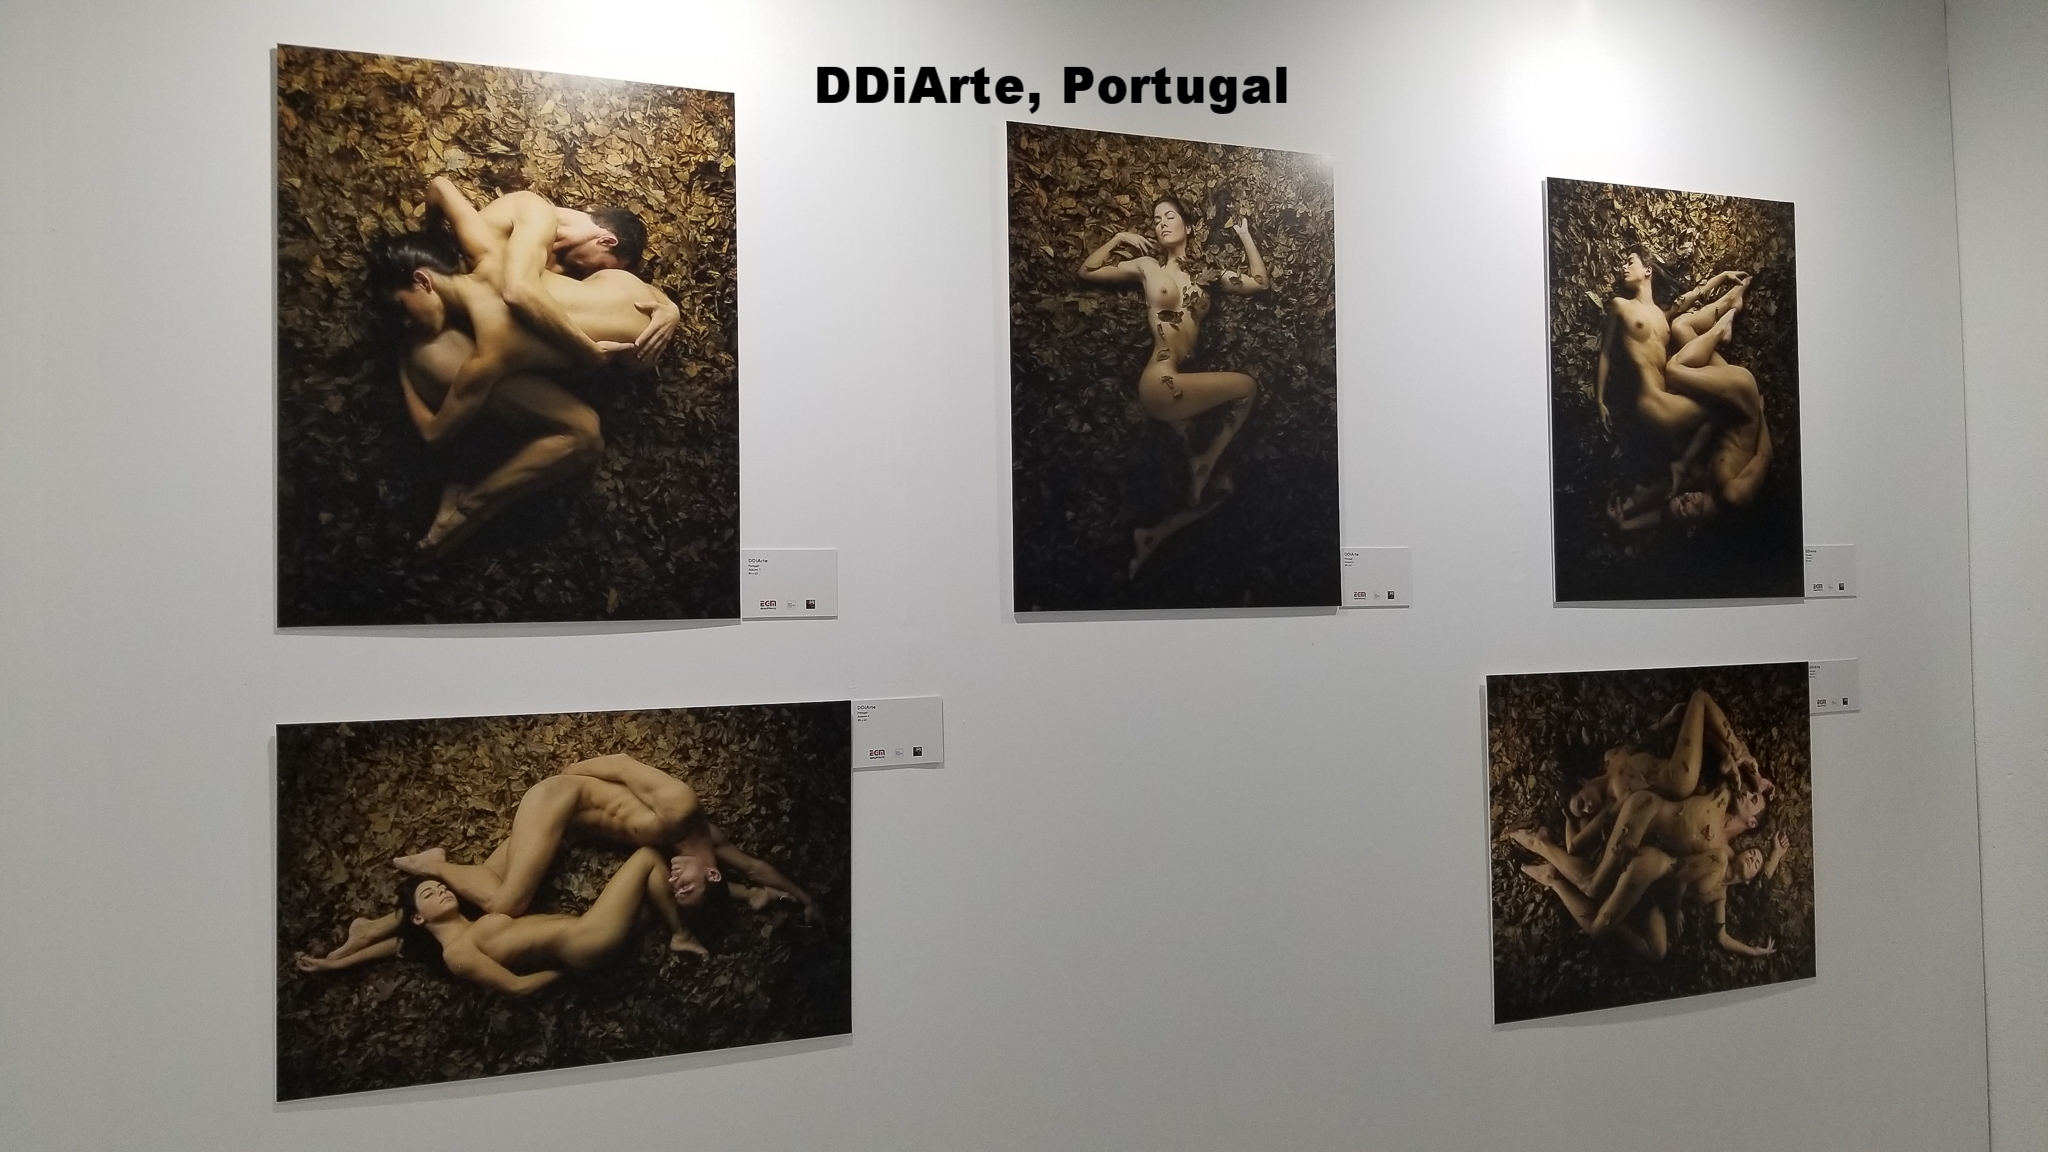 DDiArte, Portugal 